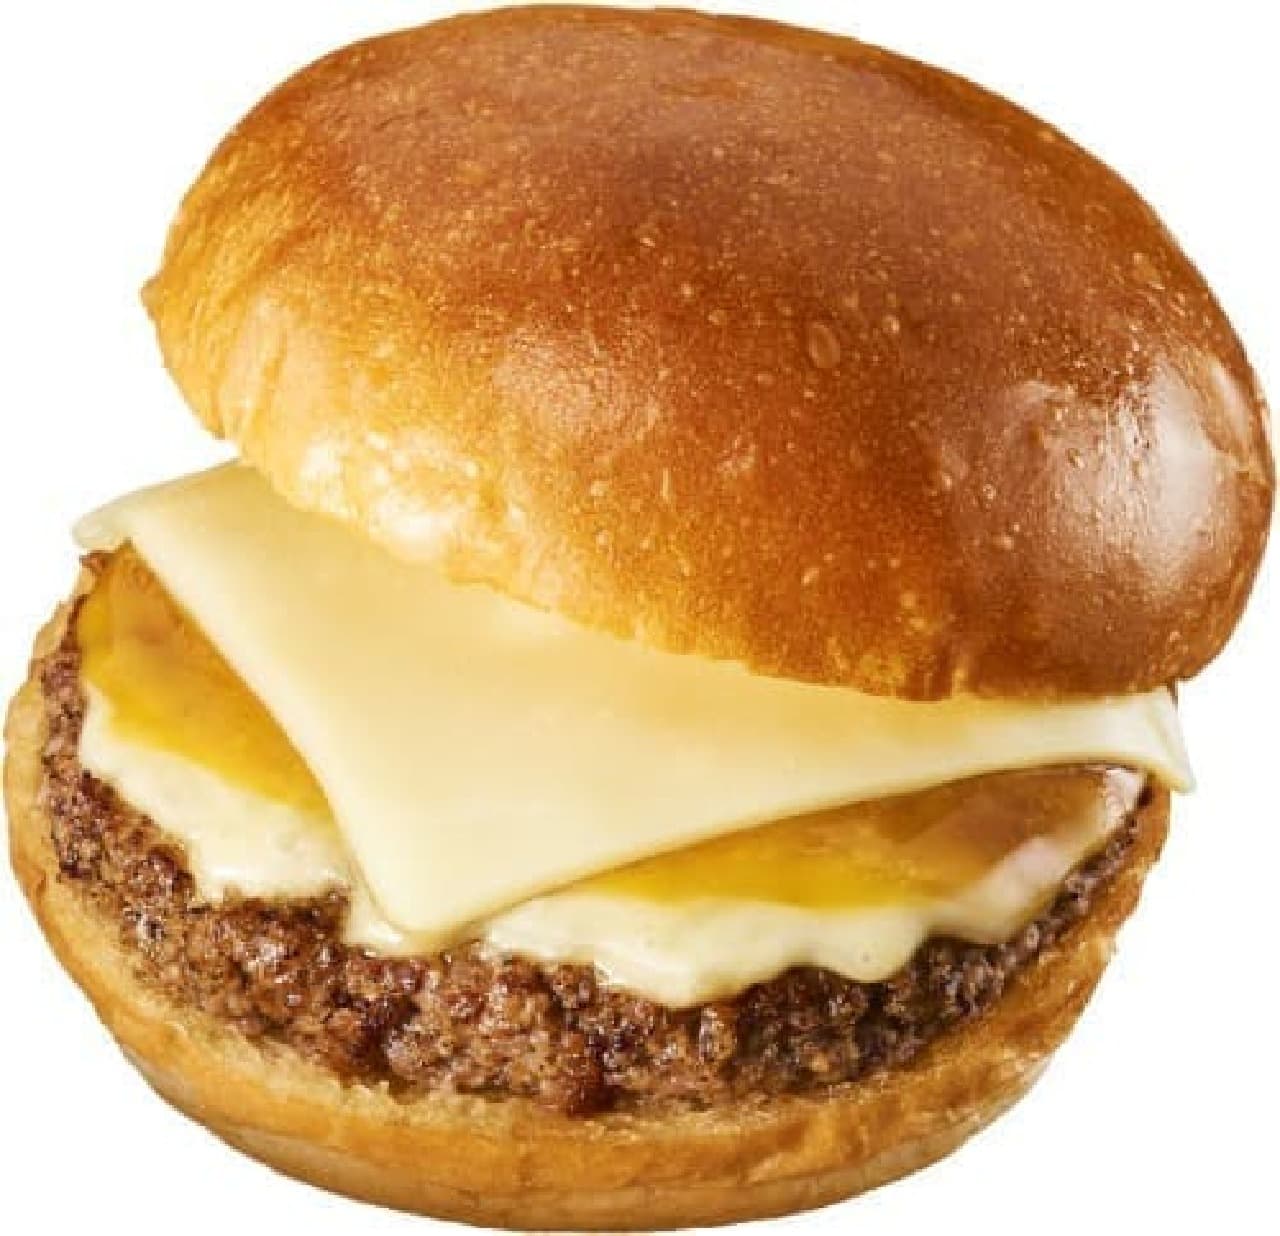 Lotteria "Mozzarella's exquisite cheeseburger"